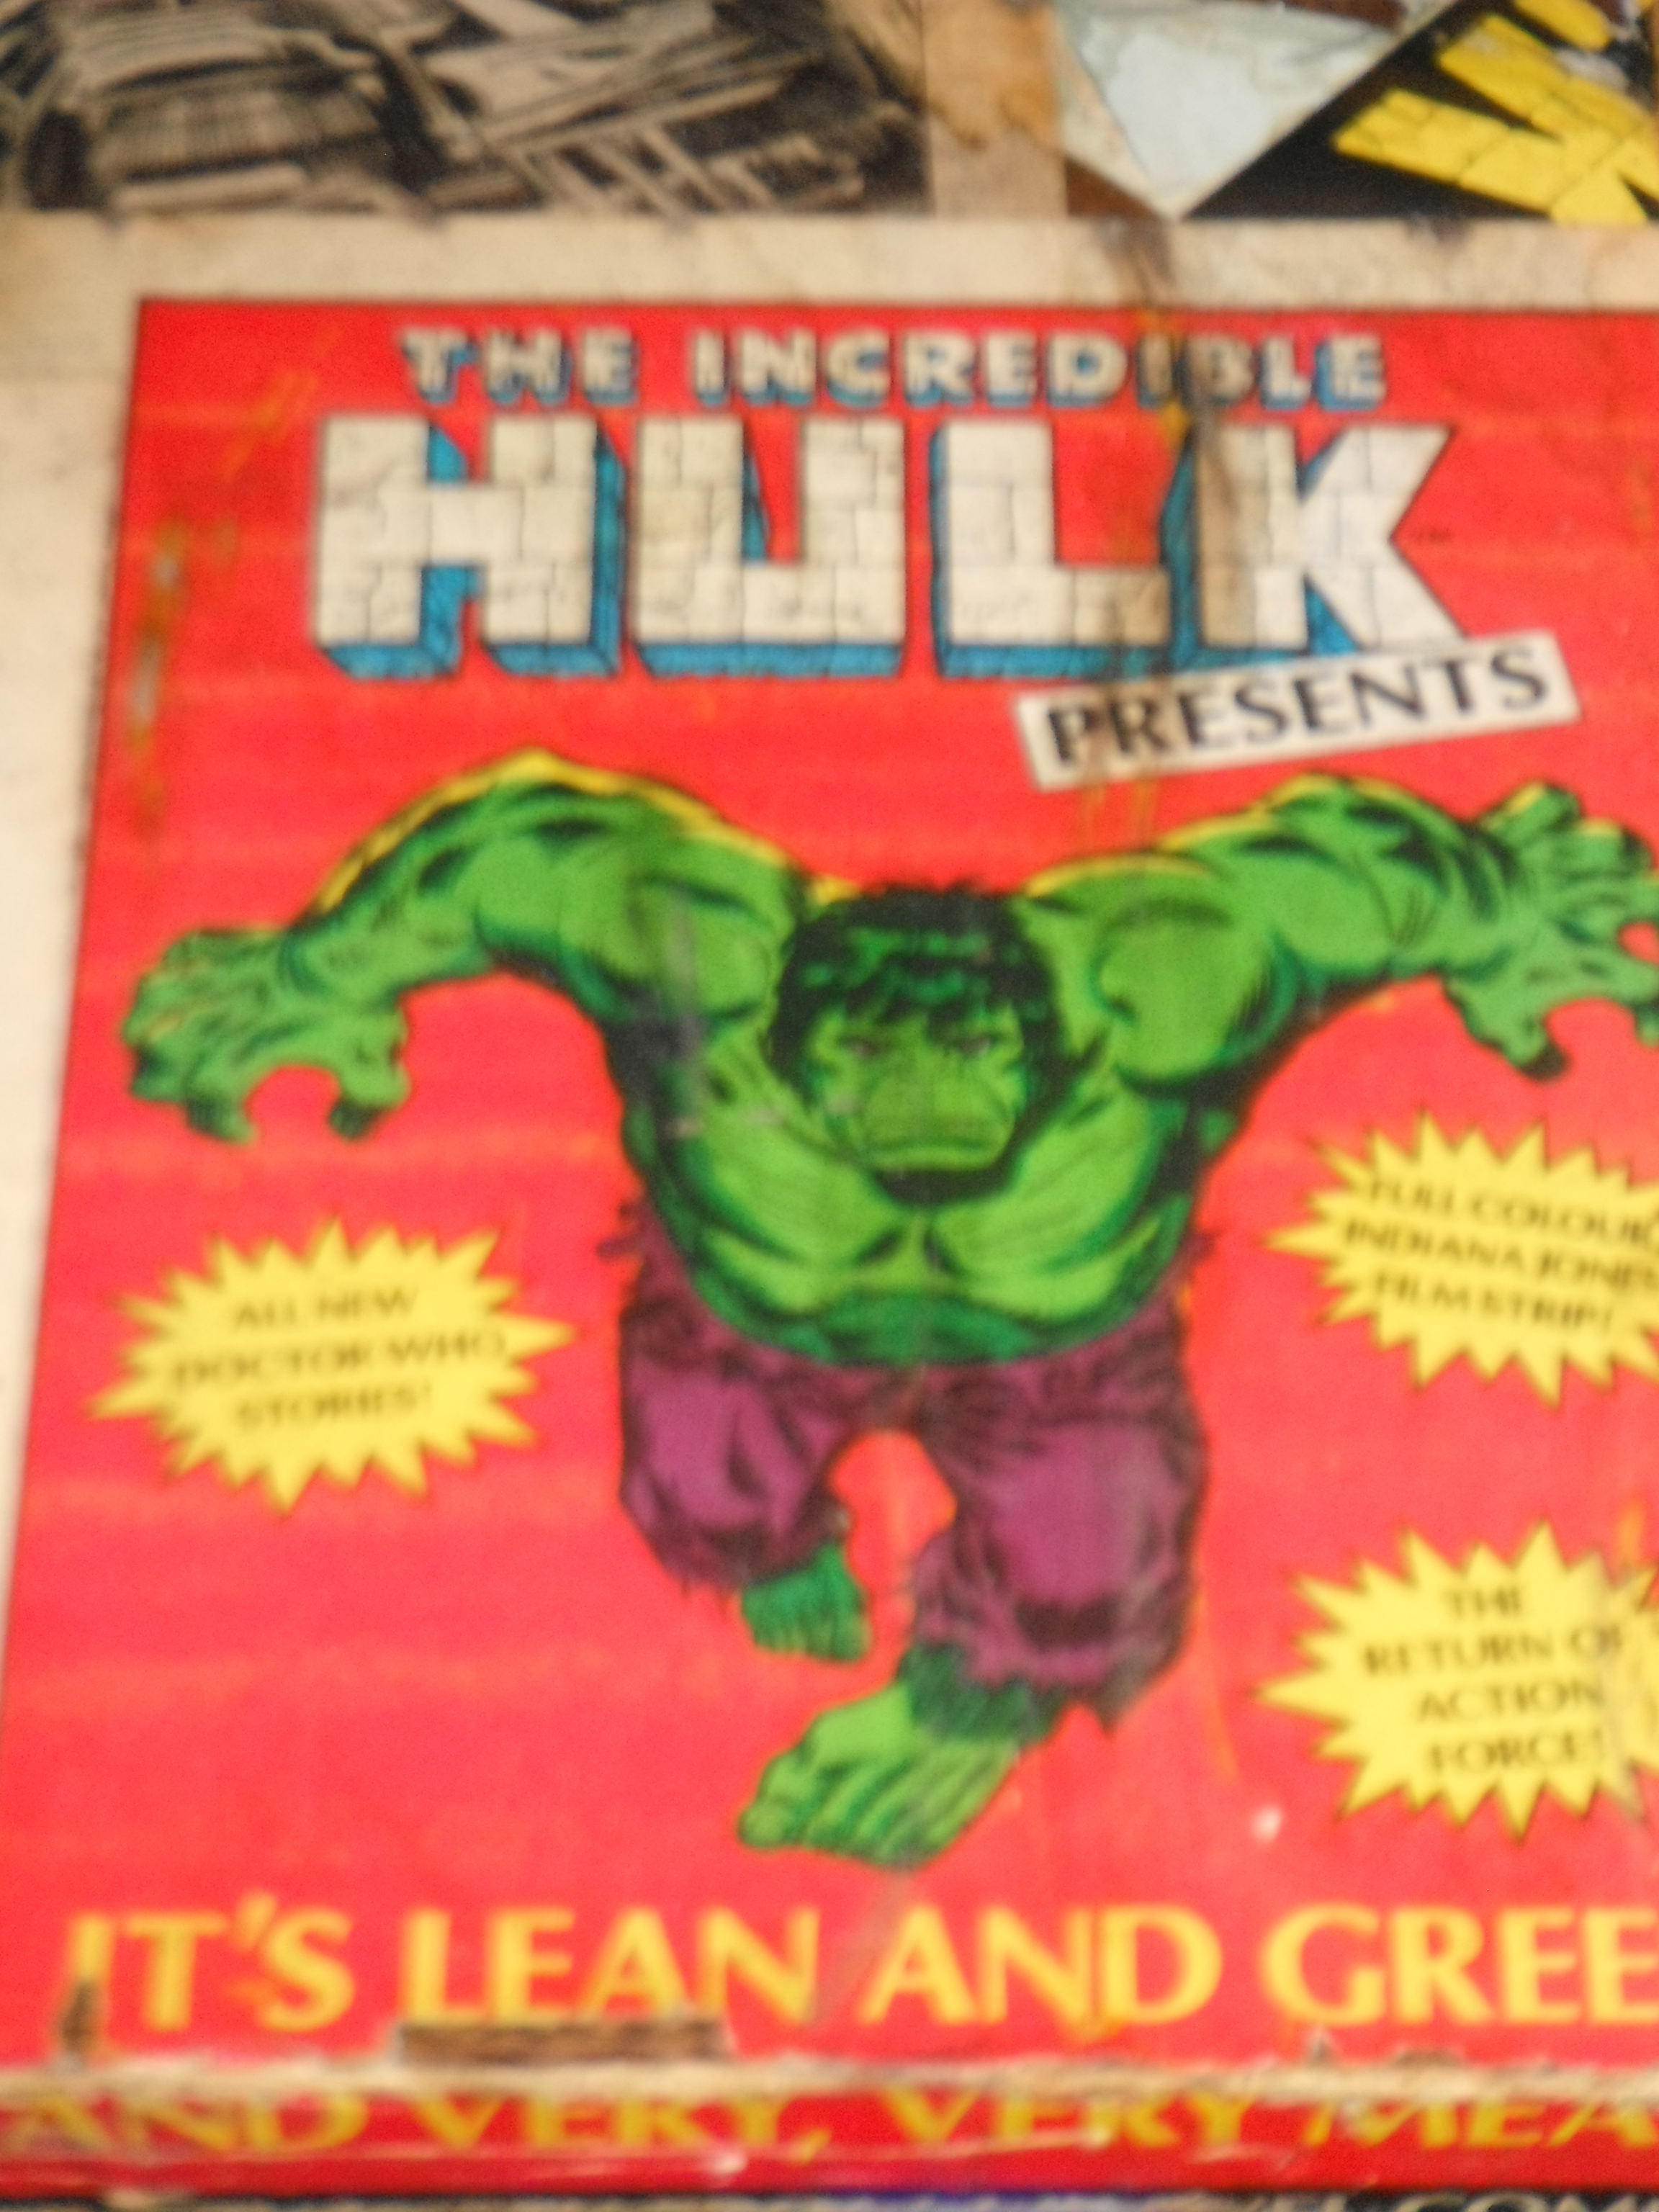 Photo taken by me – Hulk Comic cover, FAB Café, Manchester 